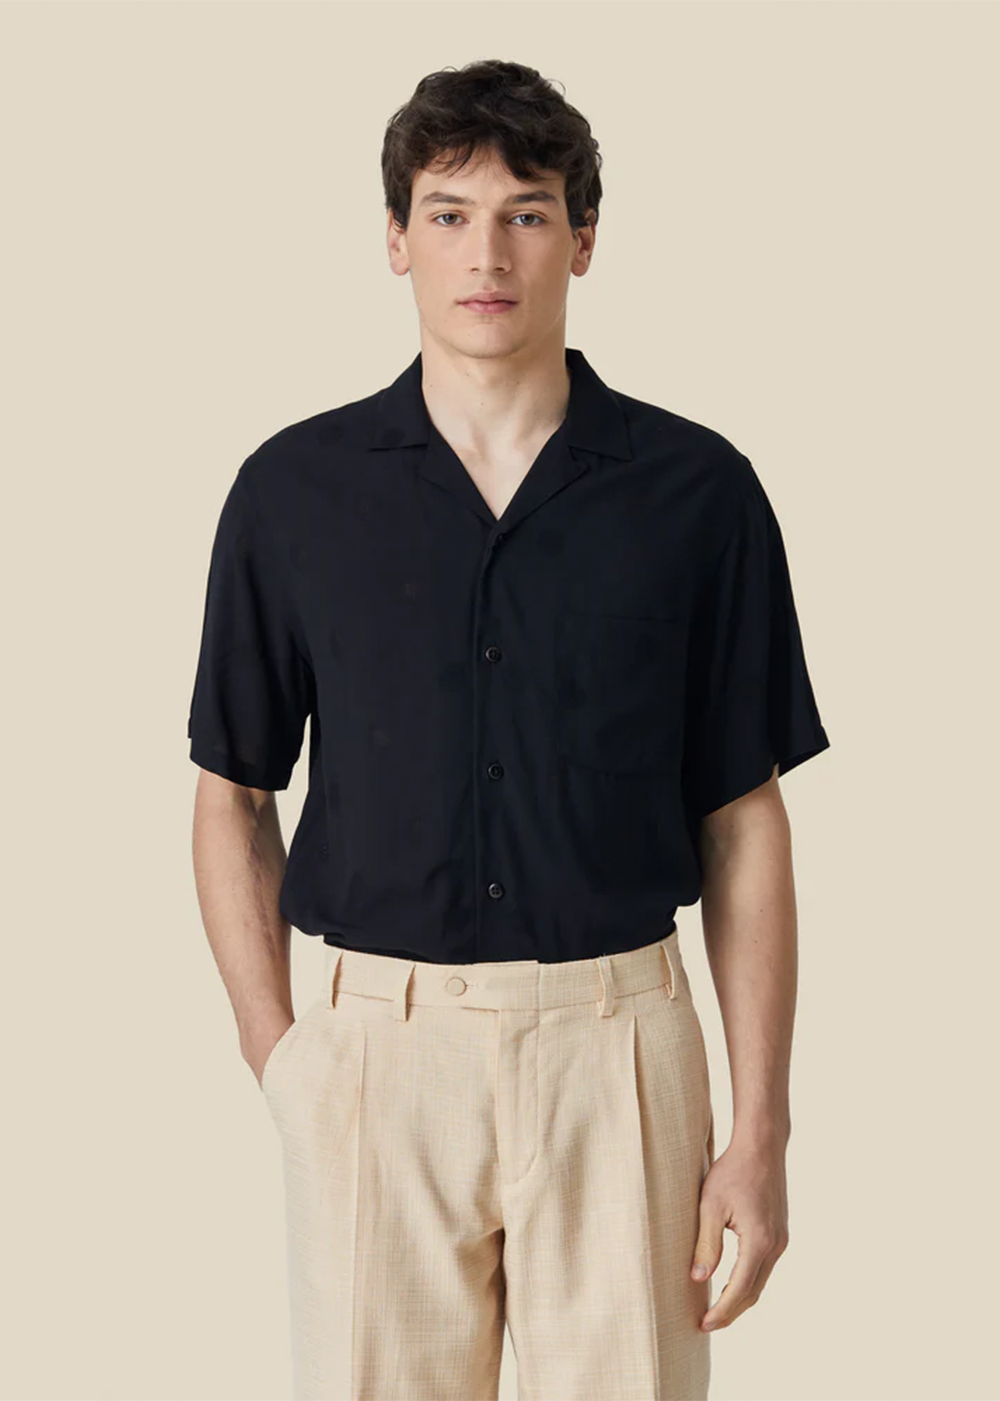 Modal Dots Shirt - Black - Portuguese Flannel Canada - Danali